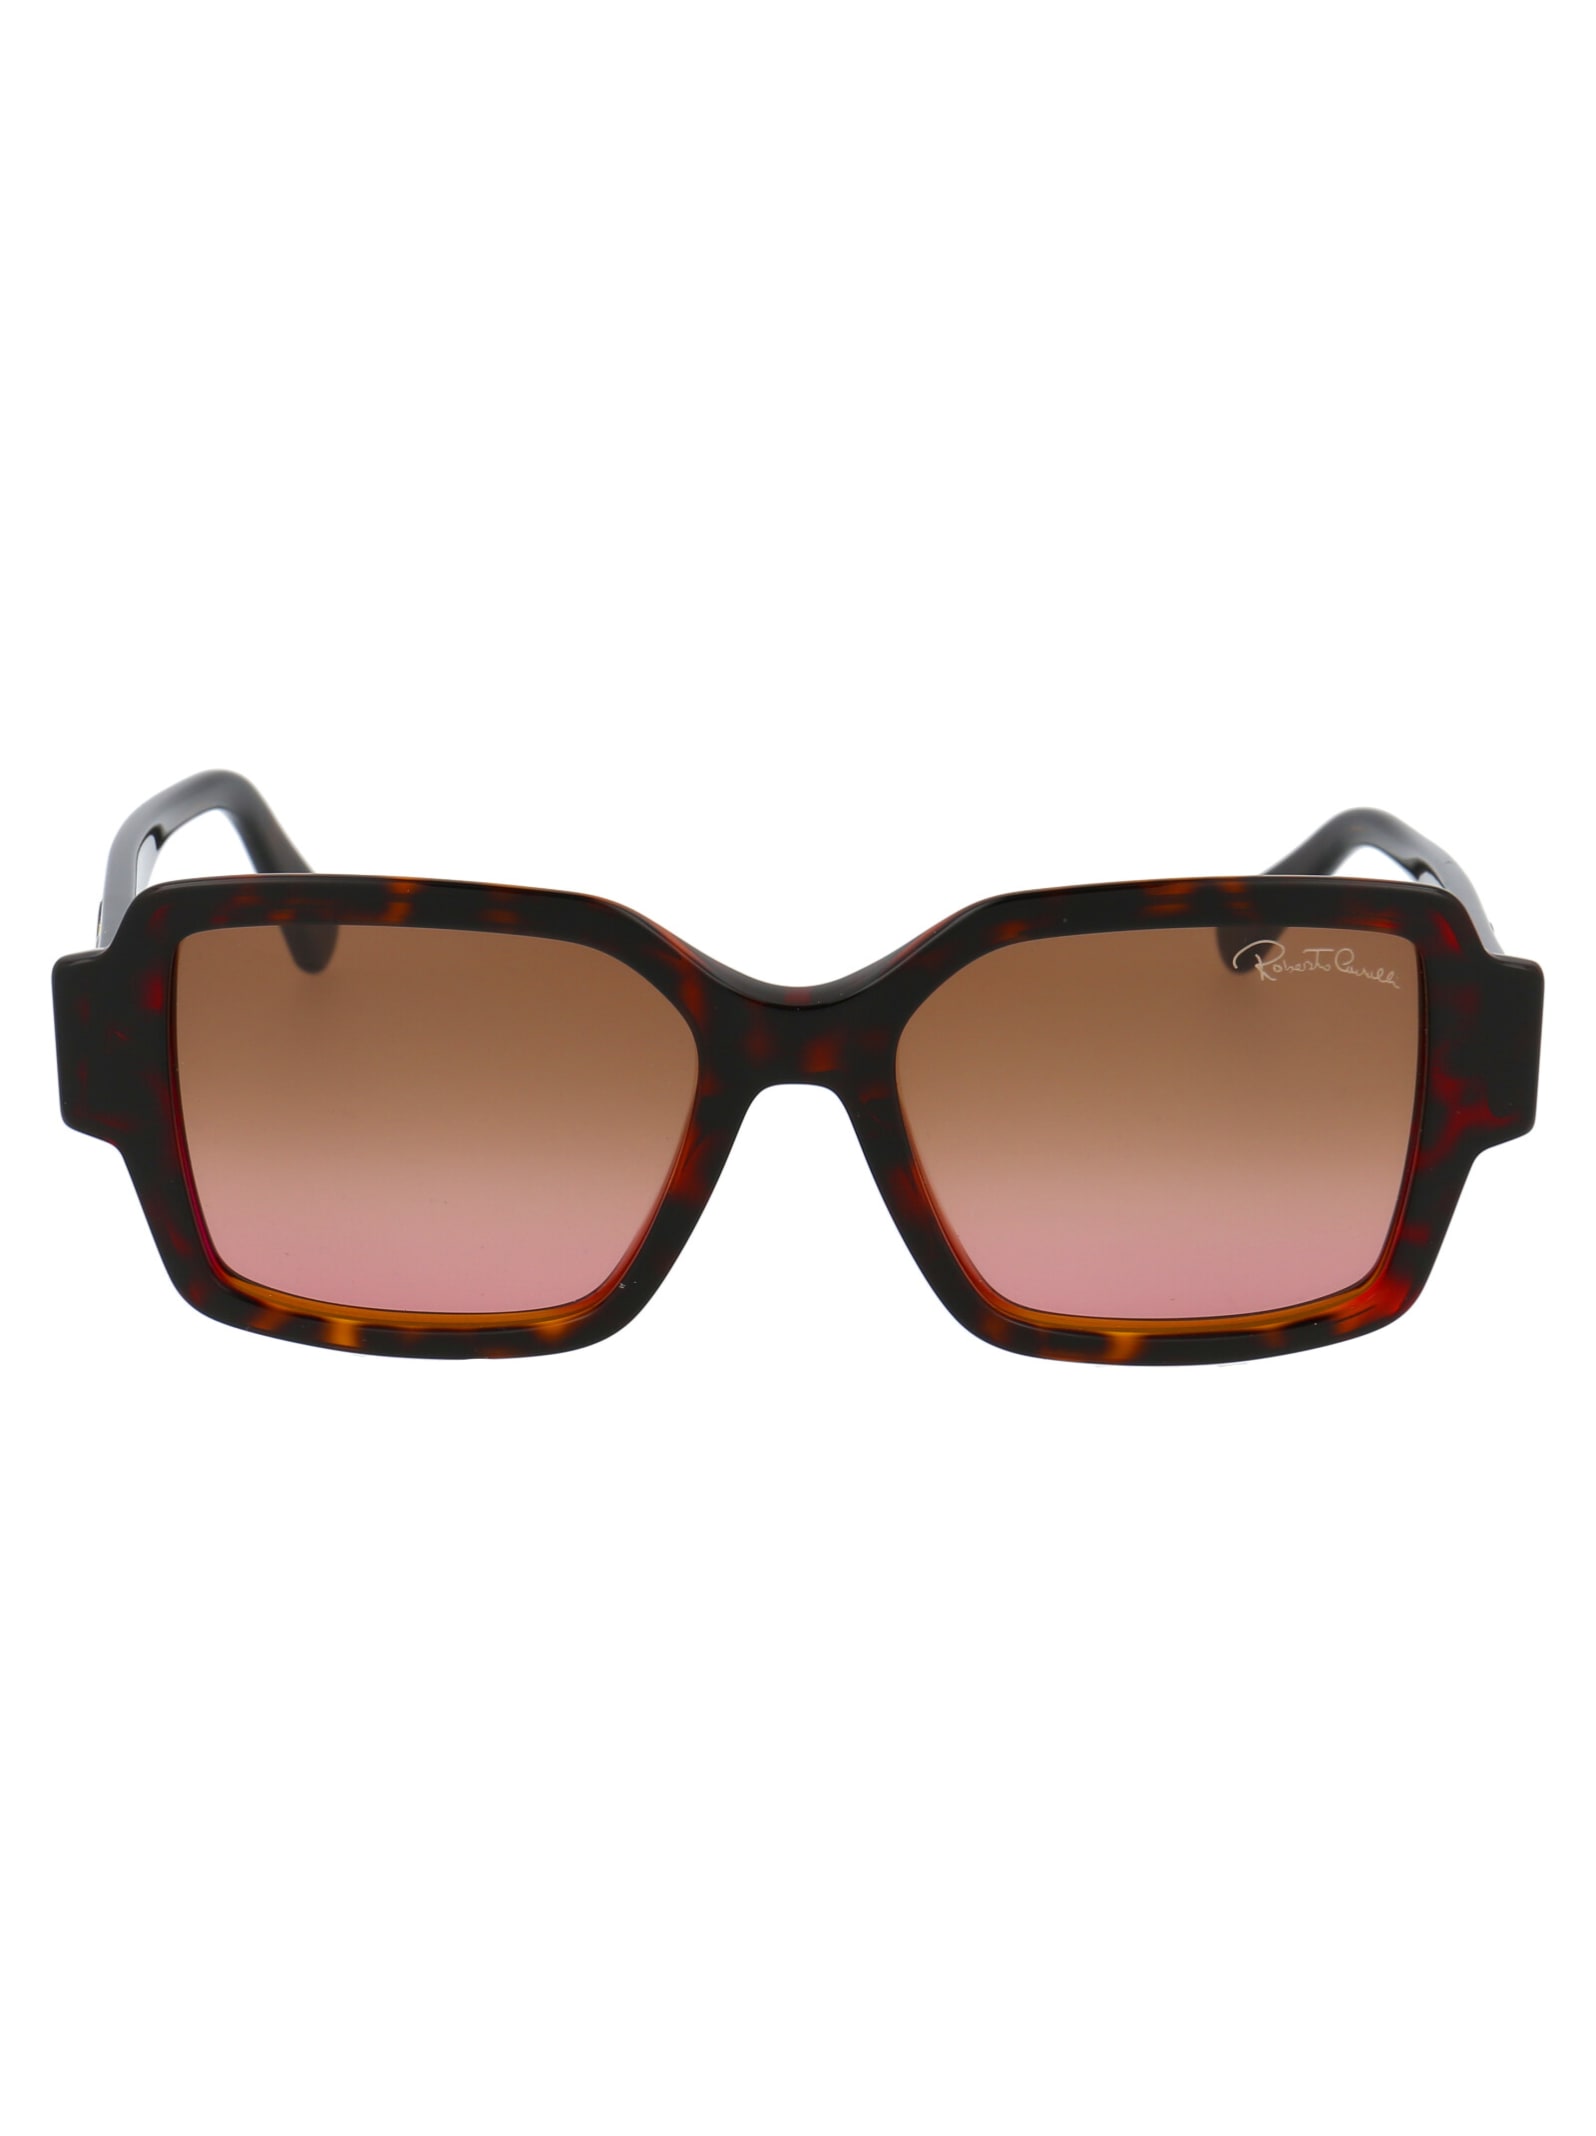 Roberto Cavalli Rc1130 Sunglasses